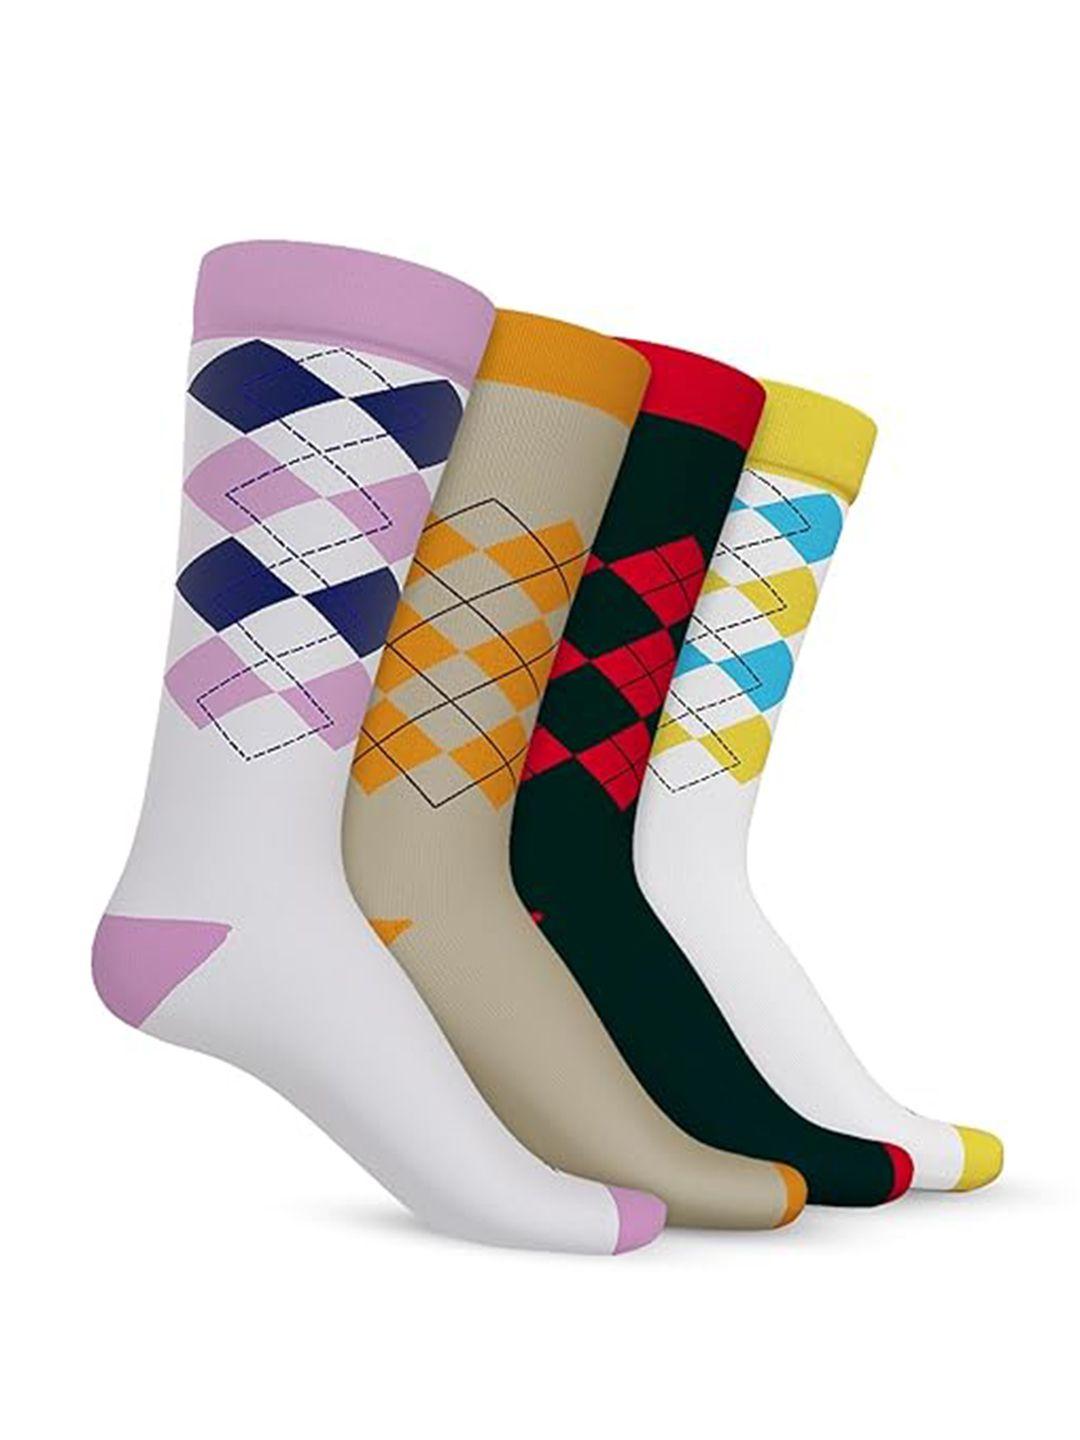 talkingsox pack of 4 argyle-patterned calf-length socks